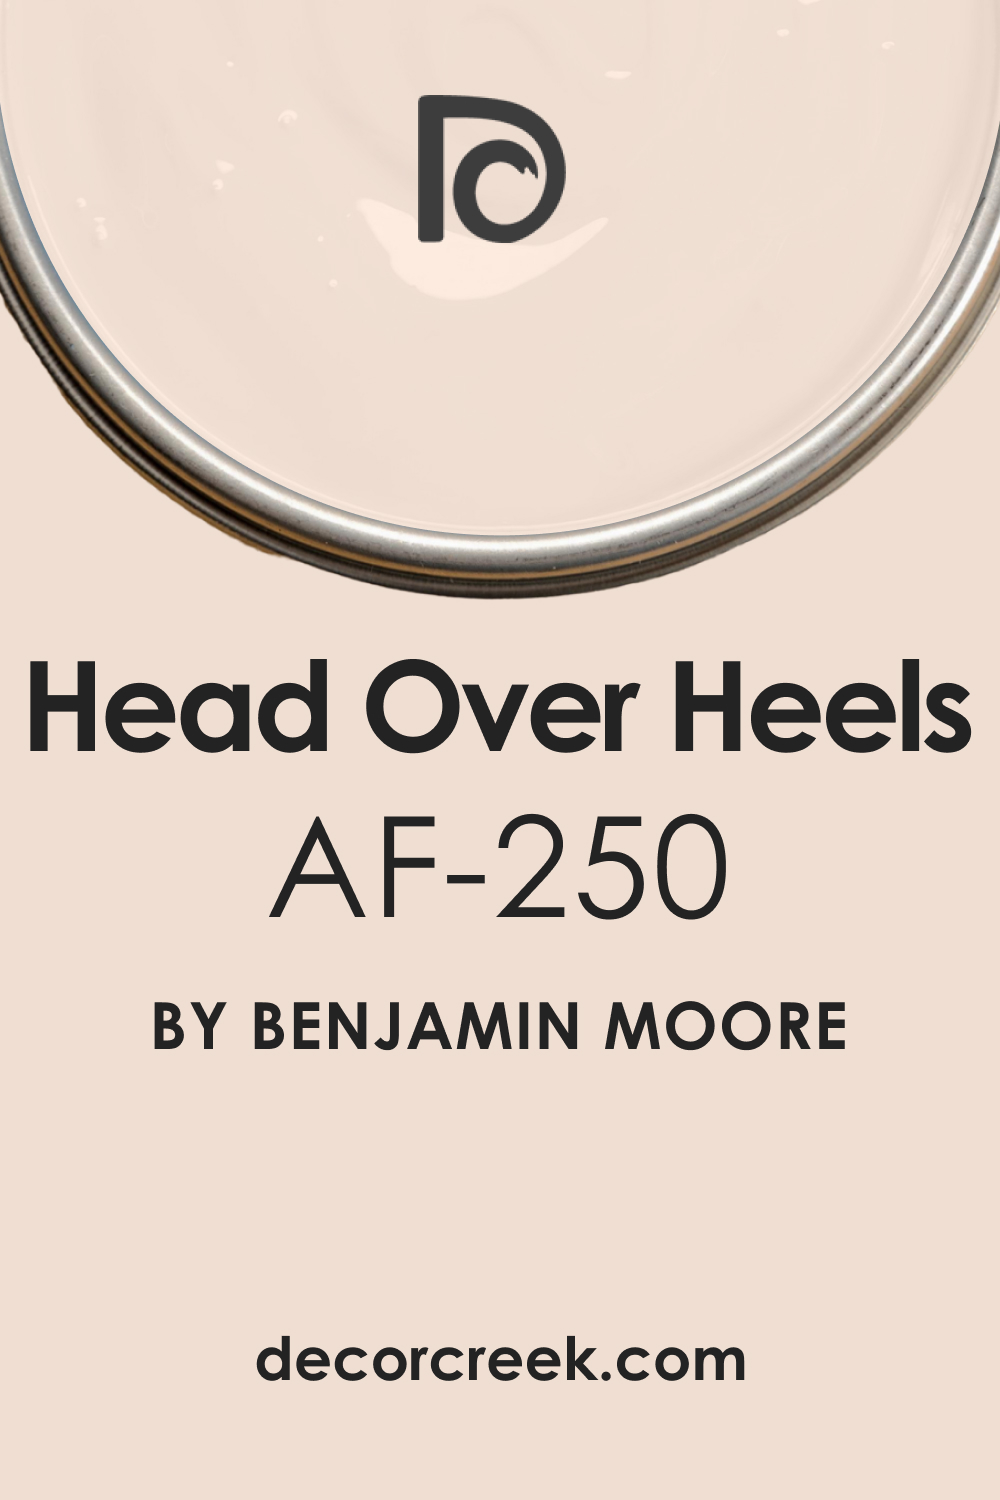 What Color Is Head Over Heels AF-250?